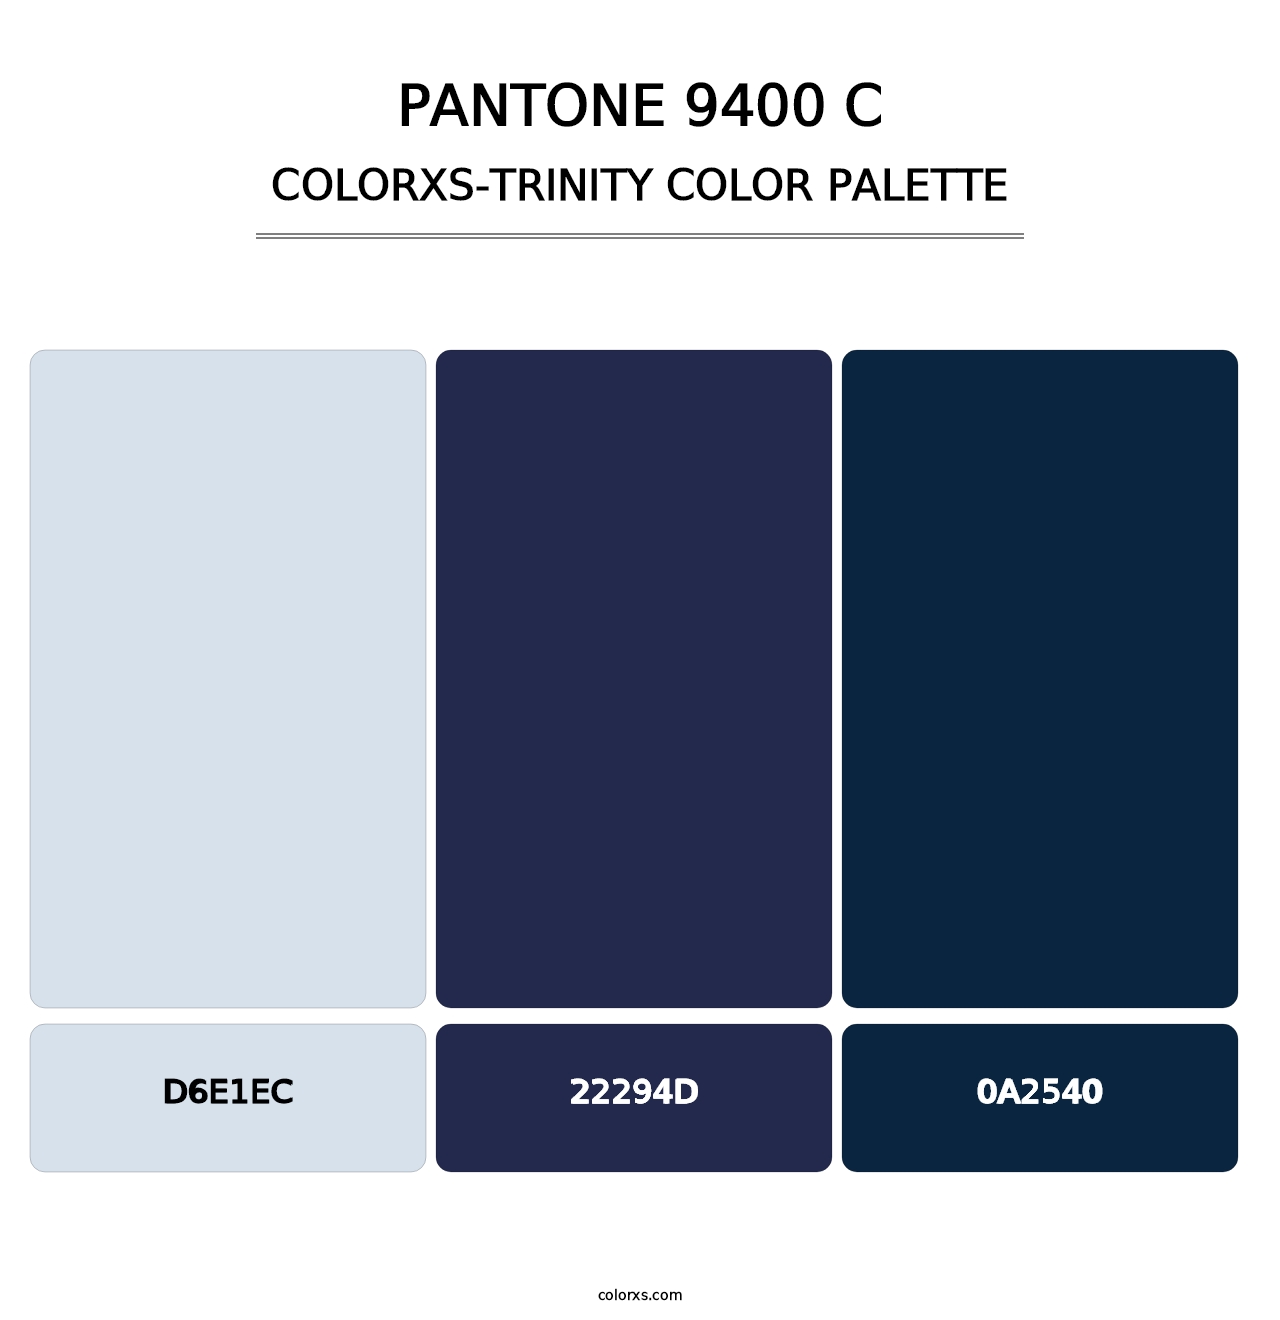 PANTONE 9400 C - Colorxs Trinity Palette